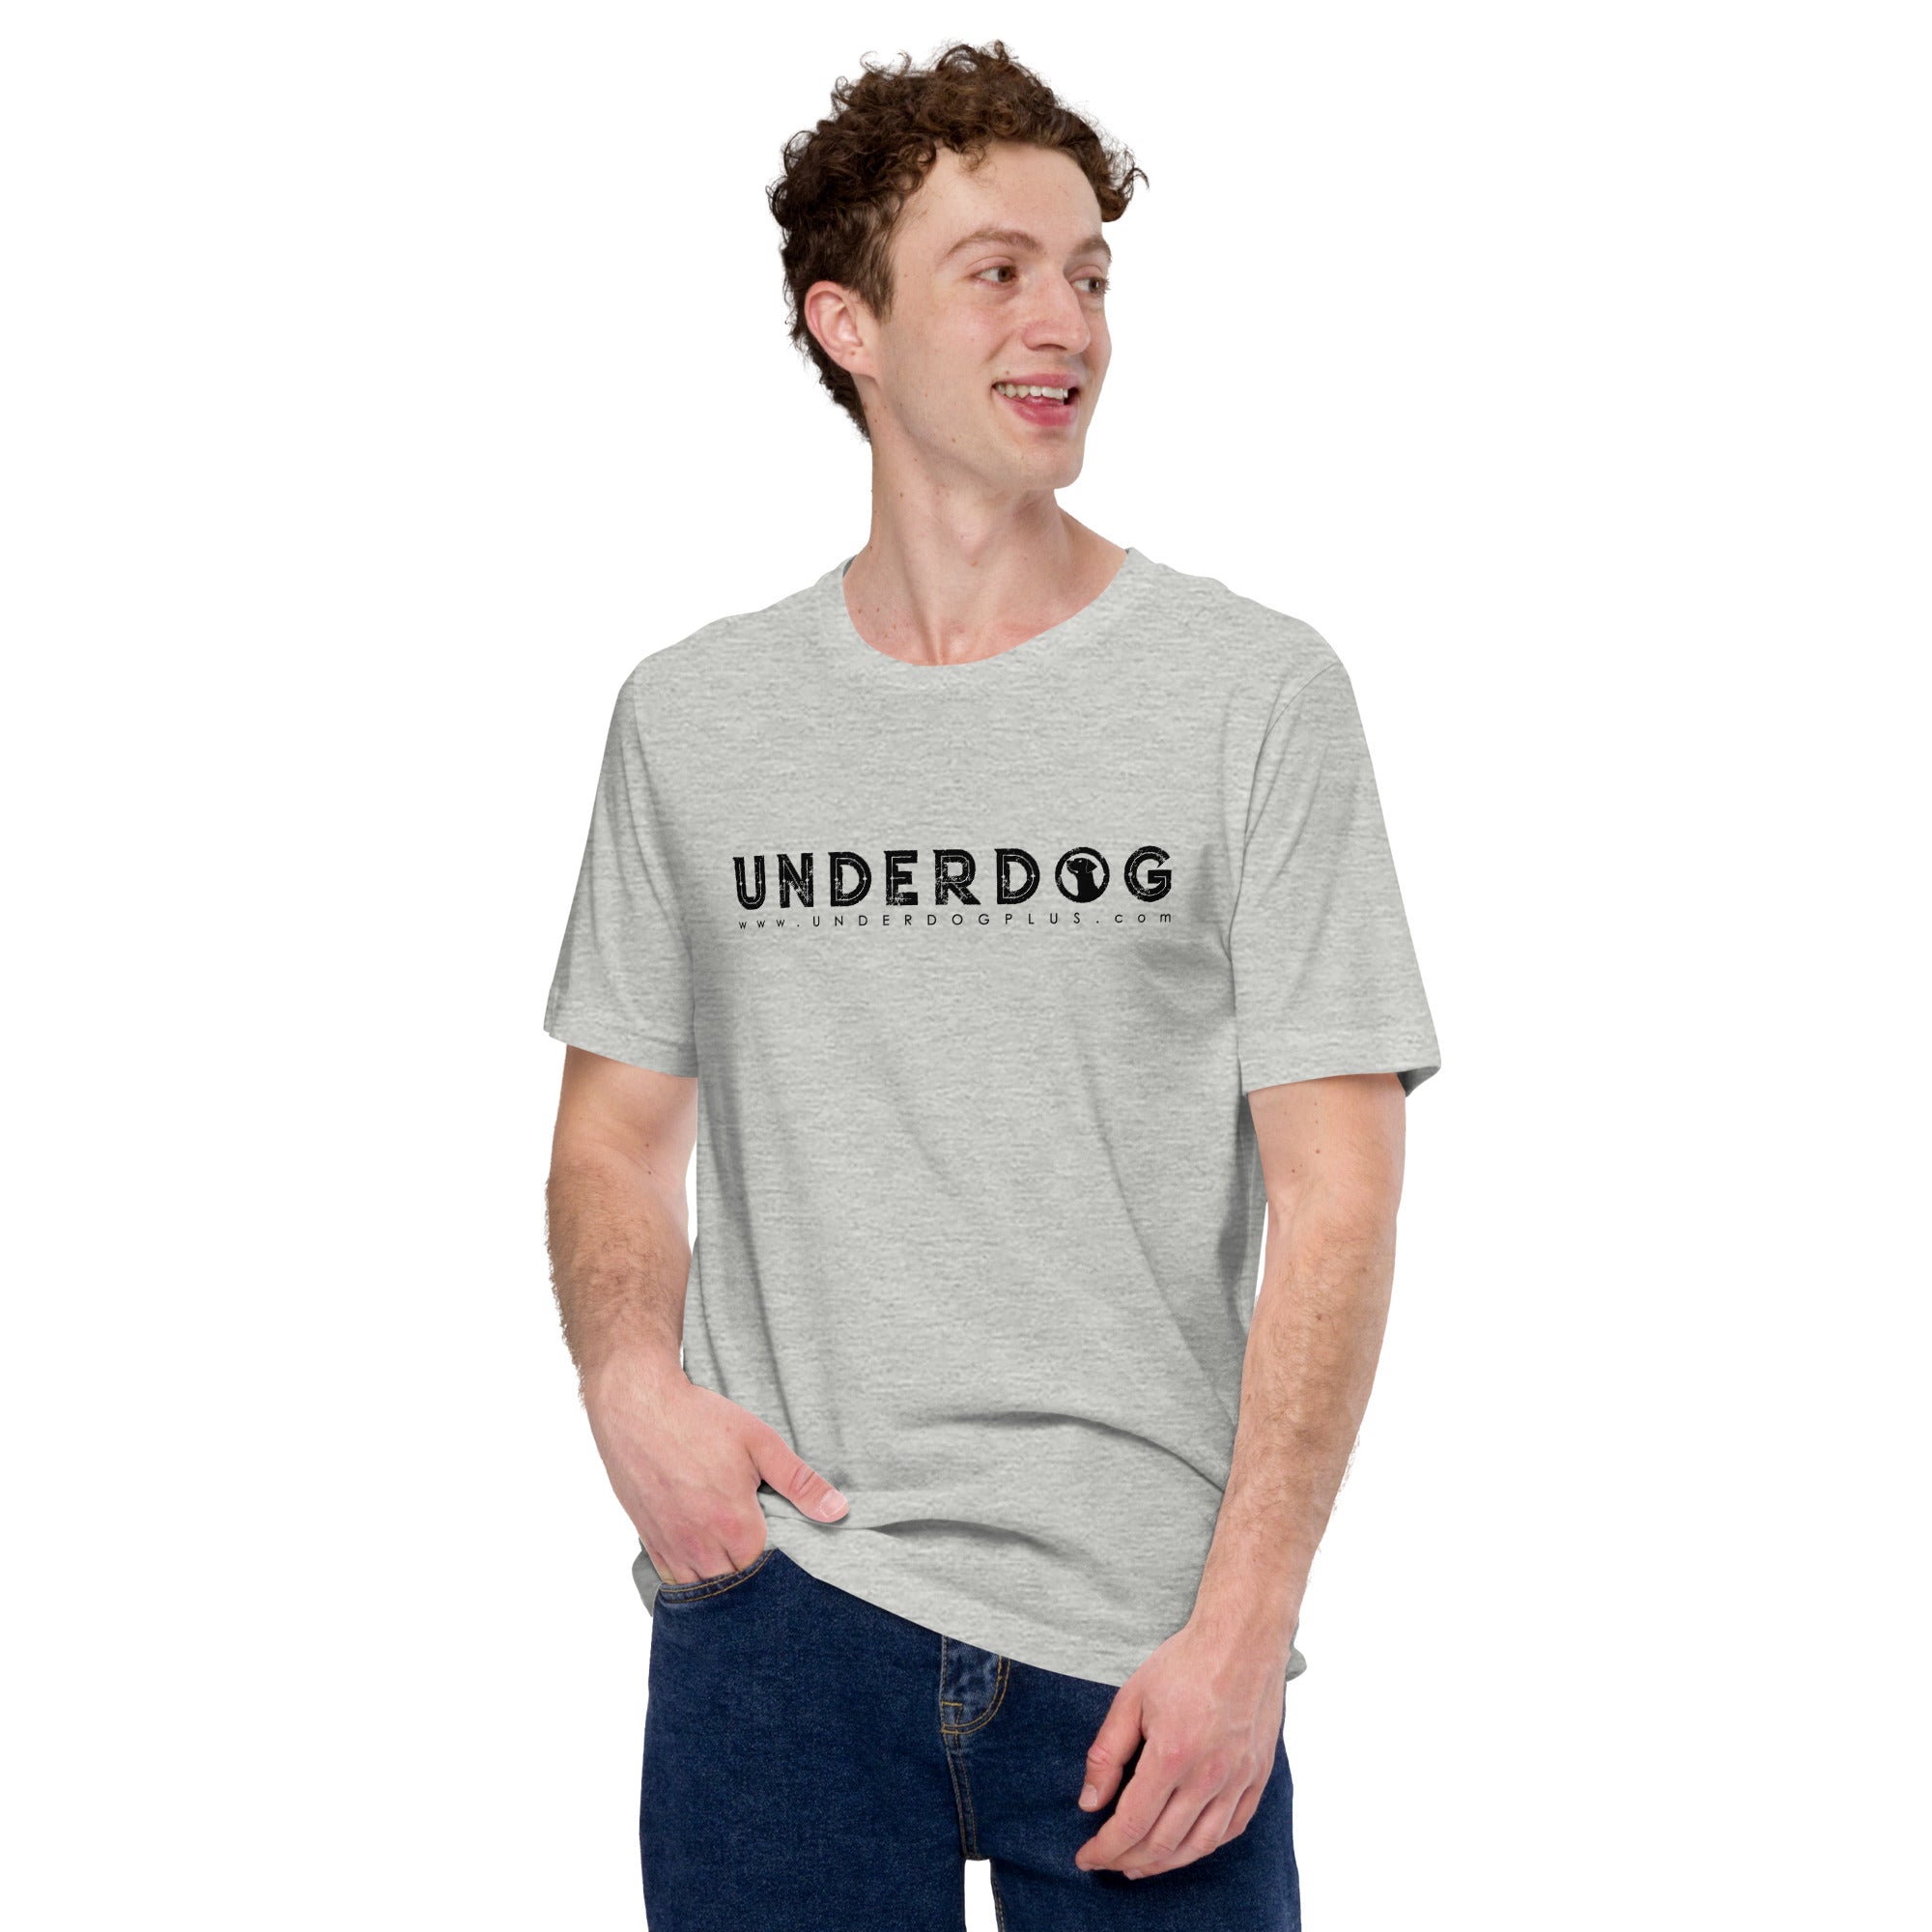 Underdog Black on Light T-Shirt